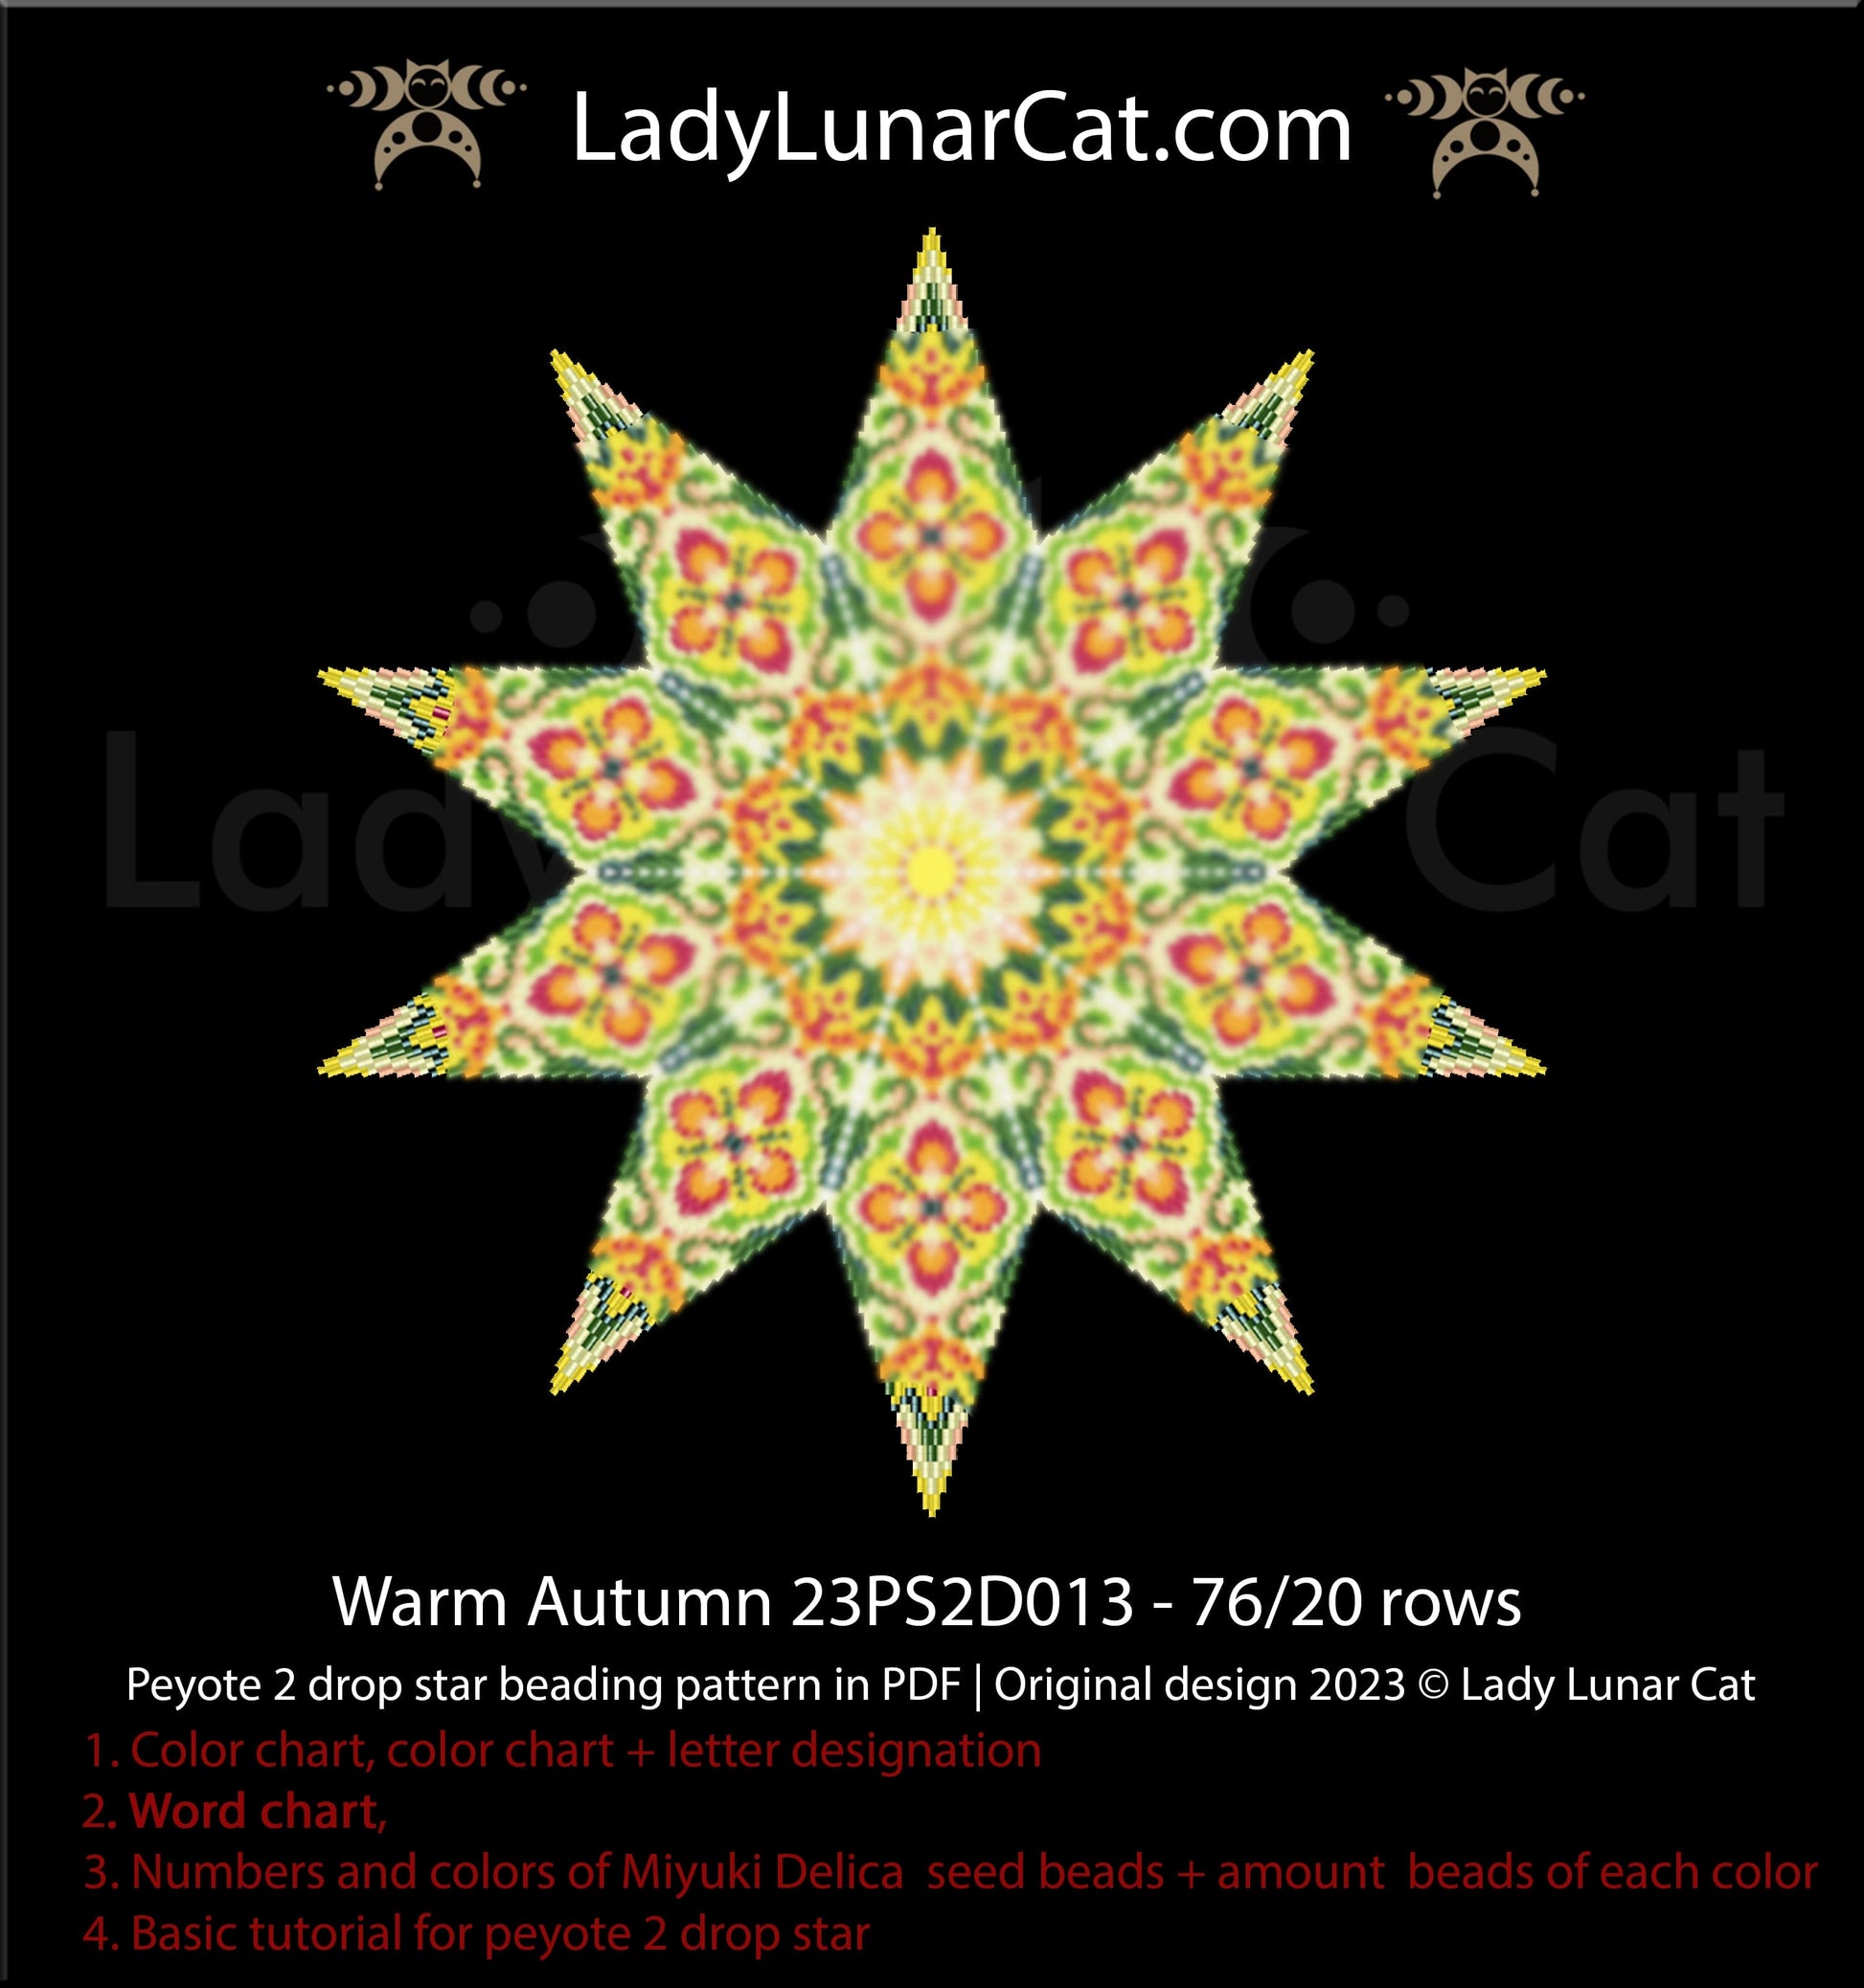 Peyote 2 drop star pattern for beading - Warm Autumn 23PS2D013 20 rows + Basic star 2 drop LadyLunarCat